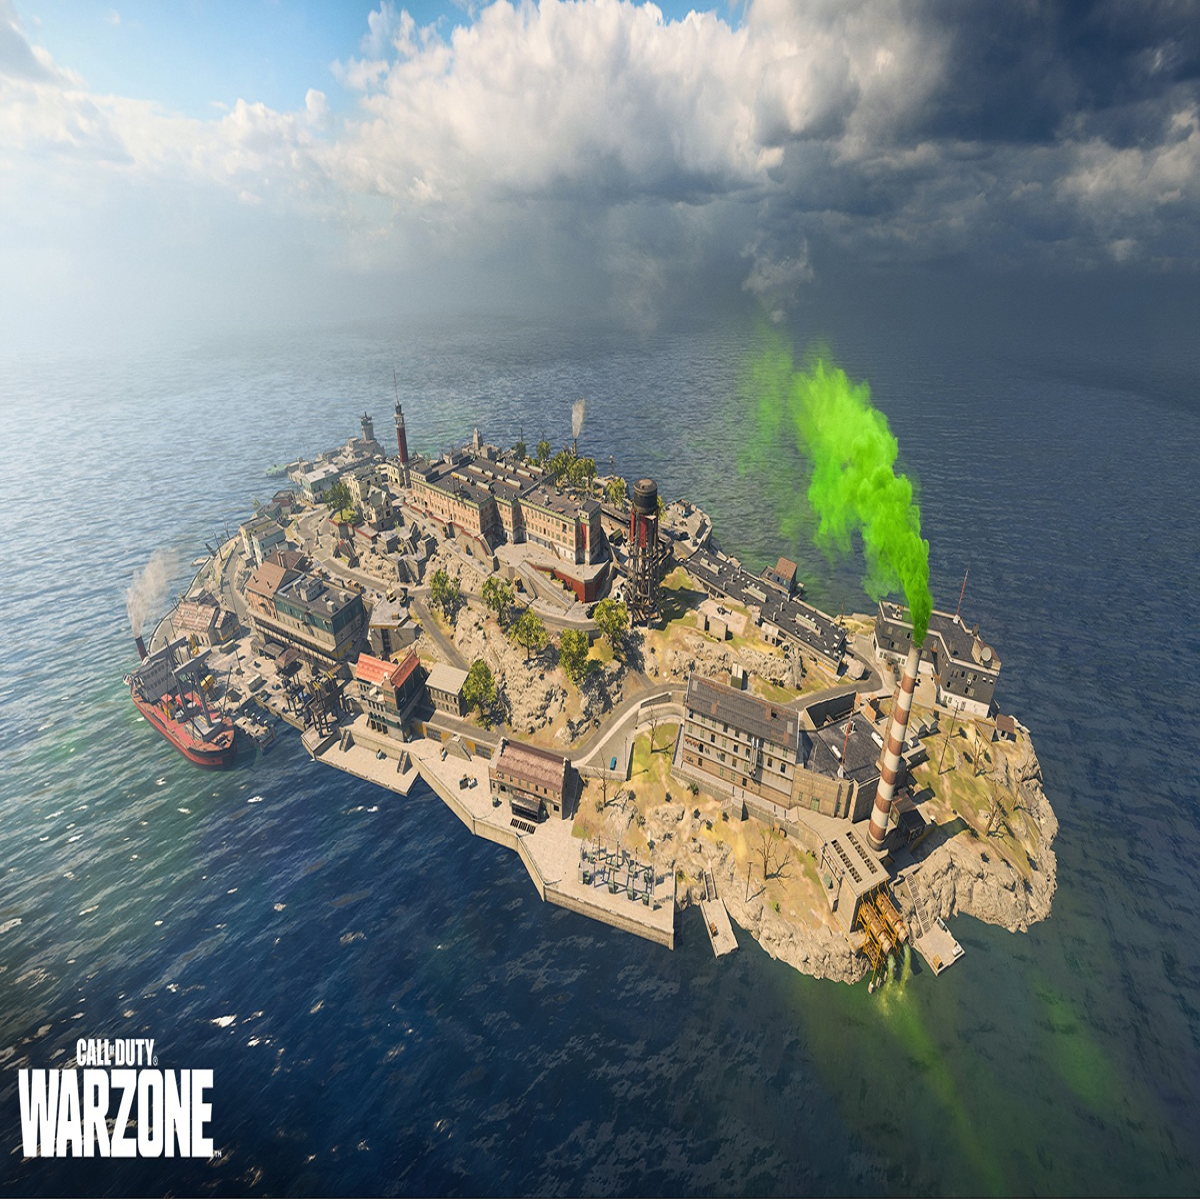 Rebirth Island is Returning to Warzone 